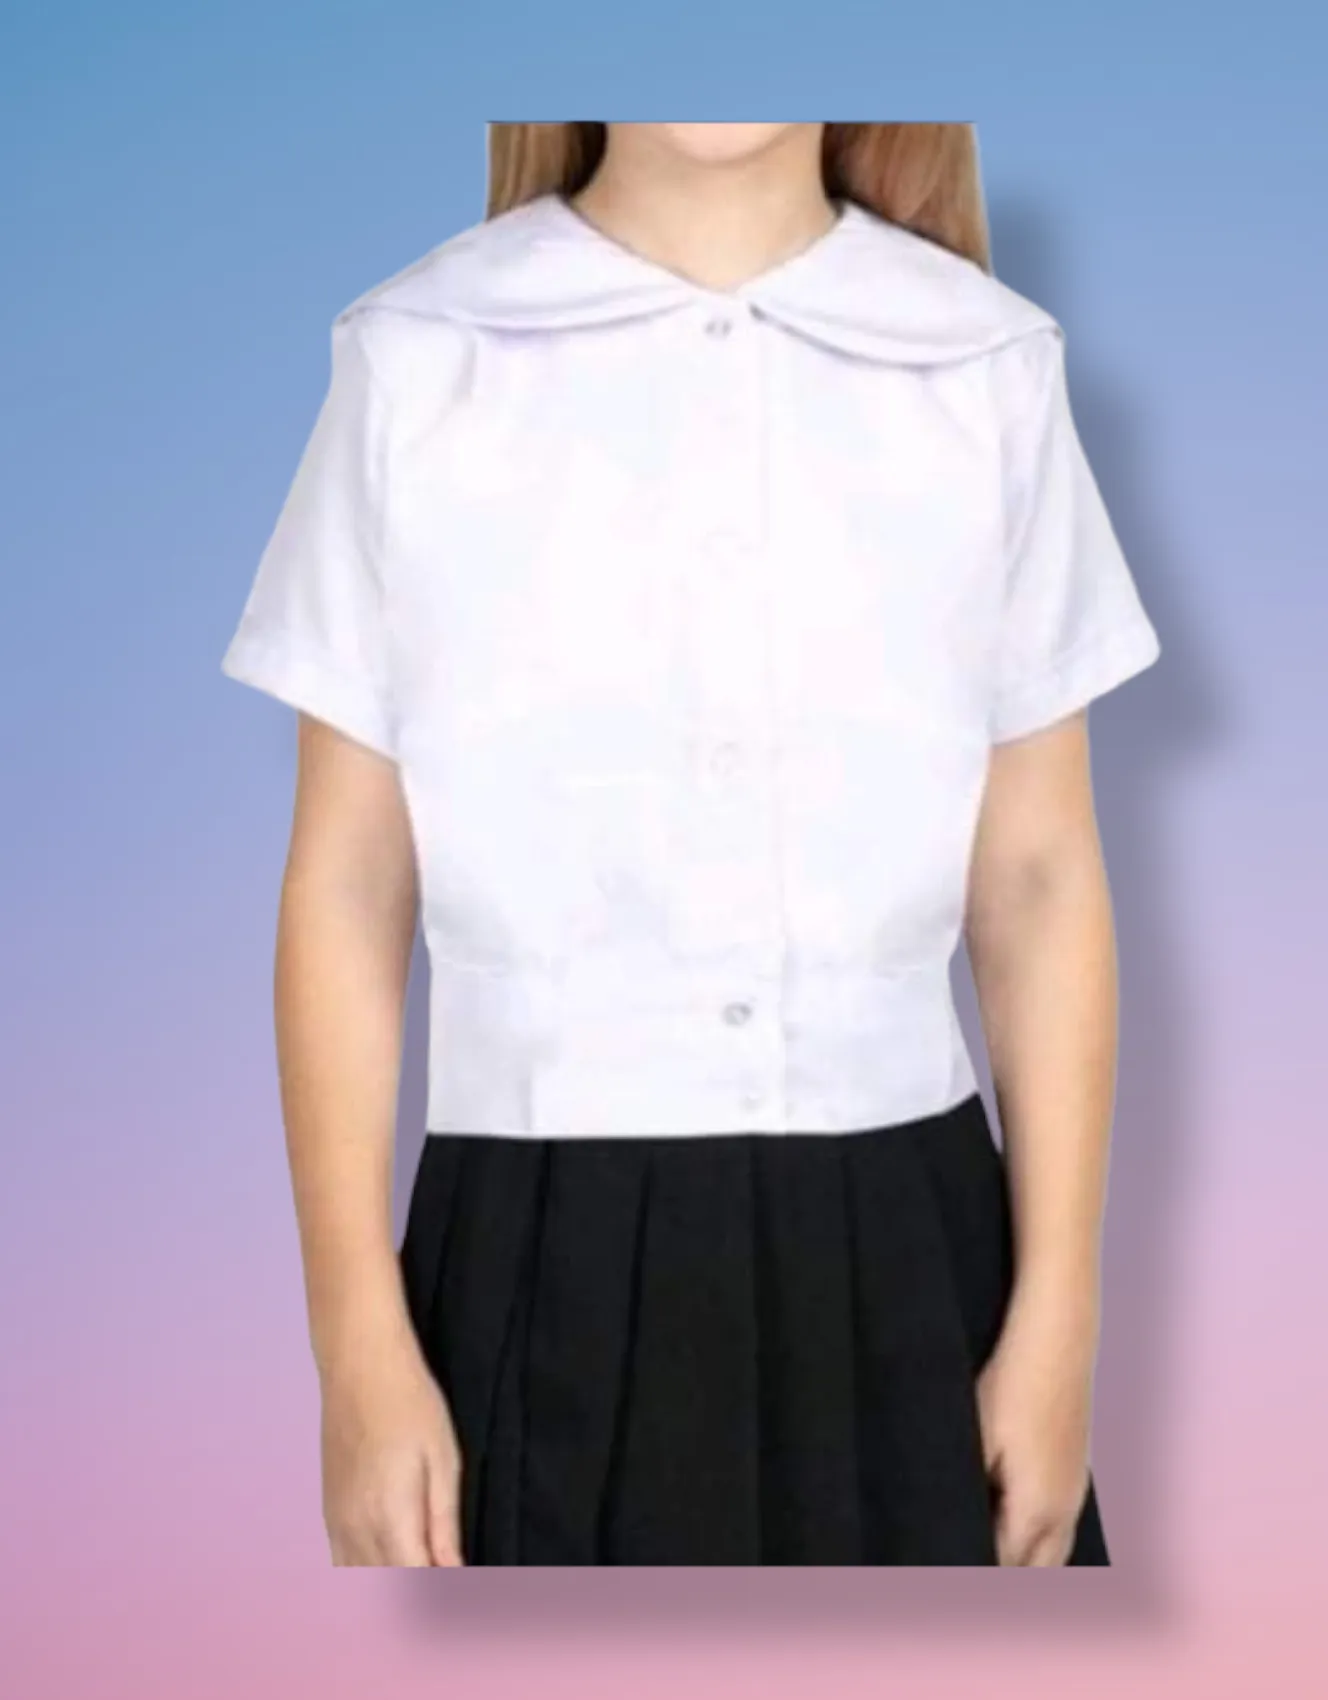 磊 Top 10 | Best School Uniforms of 2023